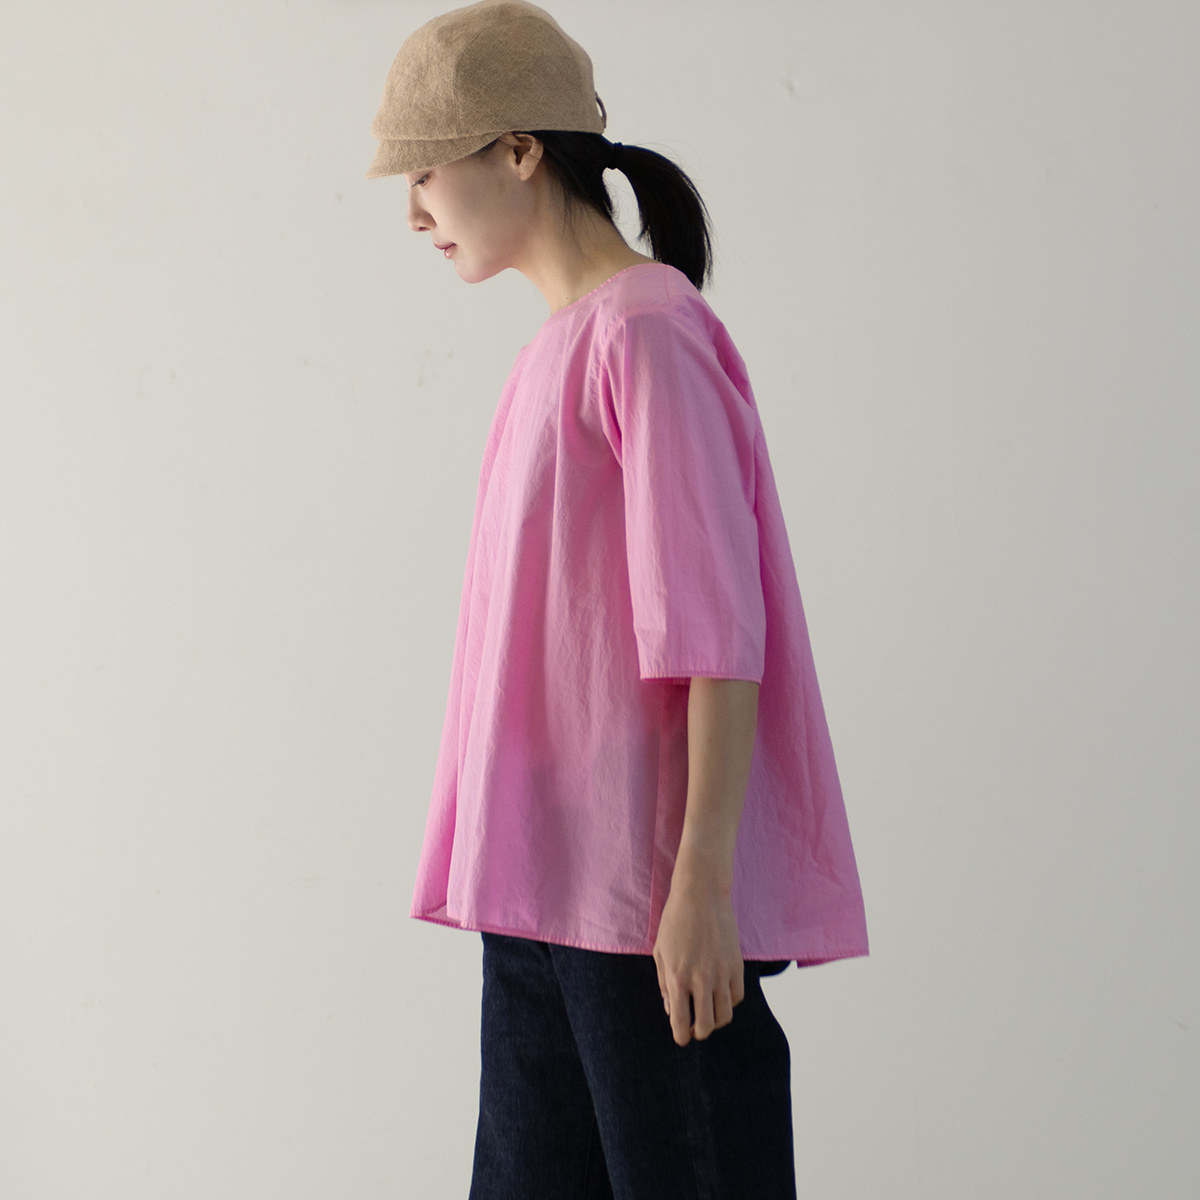 Manuelle Guibal Tee Shirt M 3/4 Keya ( mimi pink, dark night )